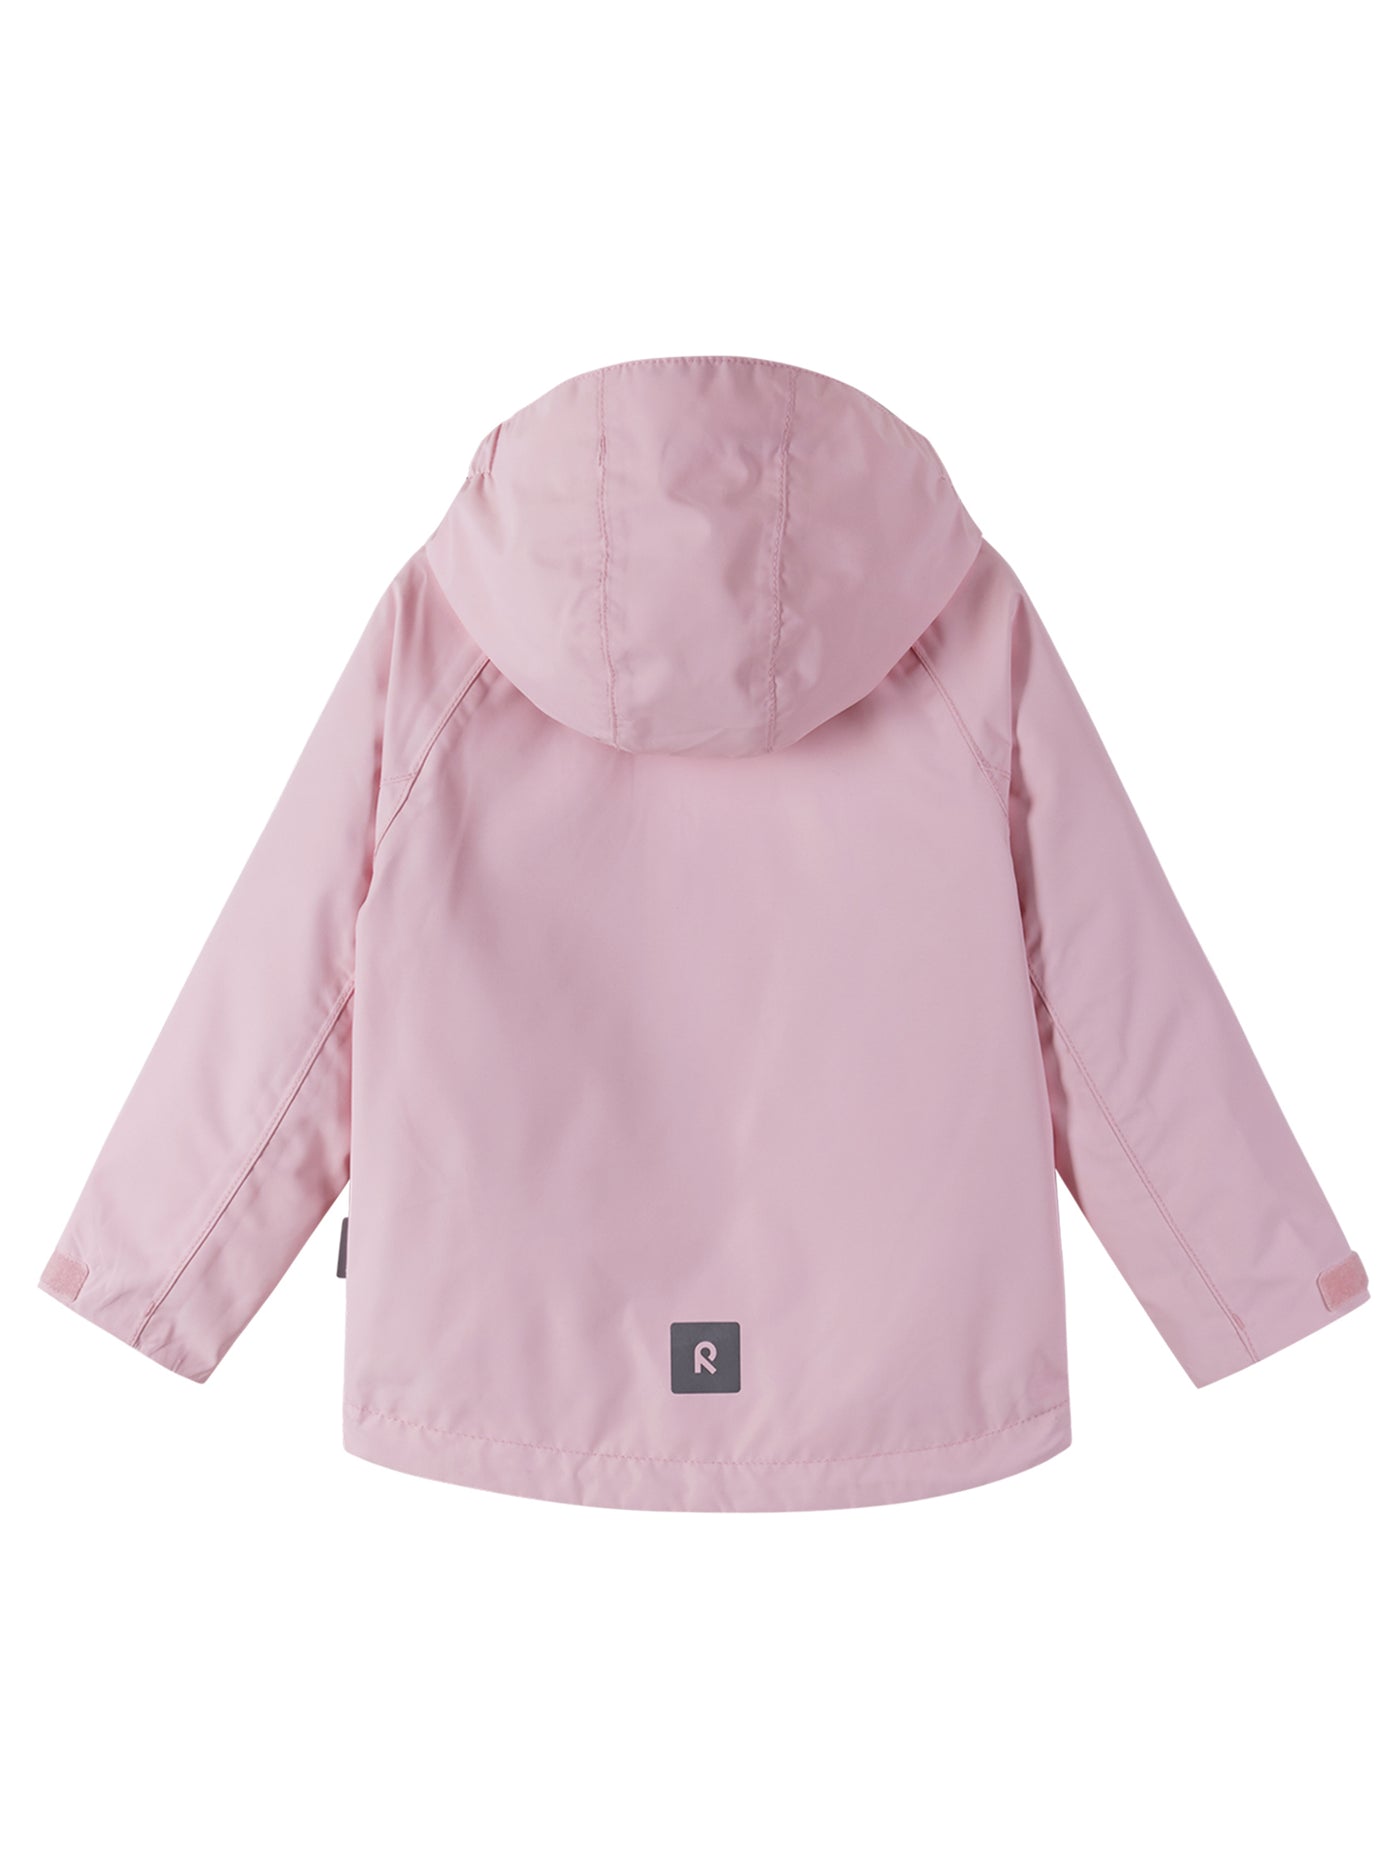 Soutu - Children's mid-season jacket